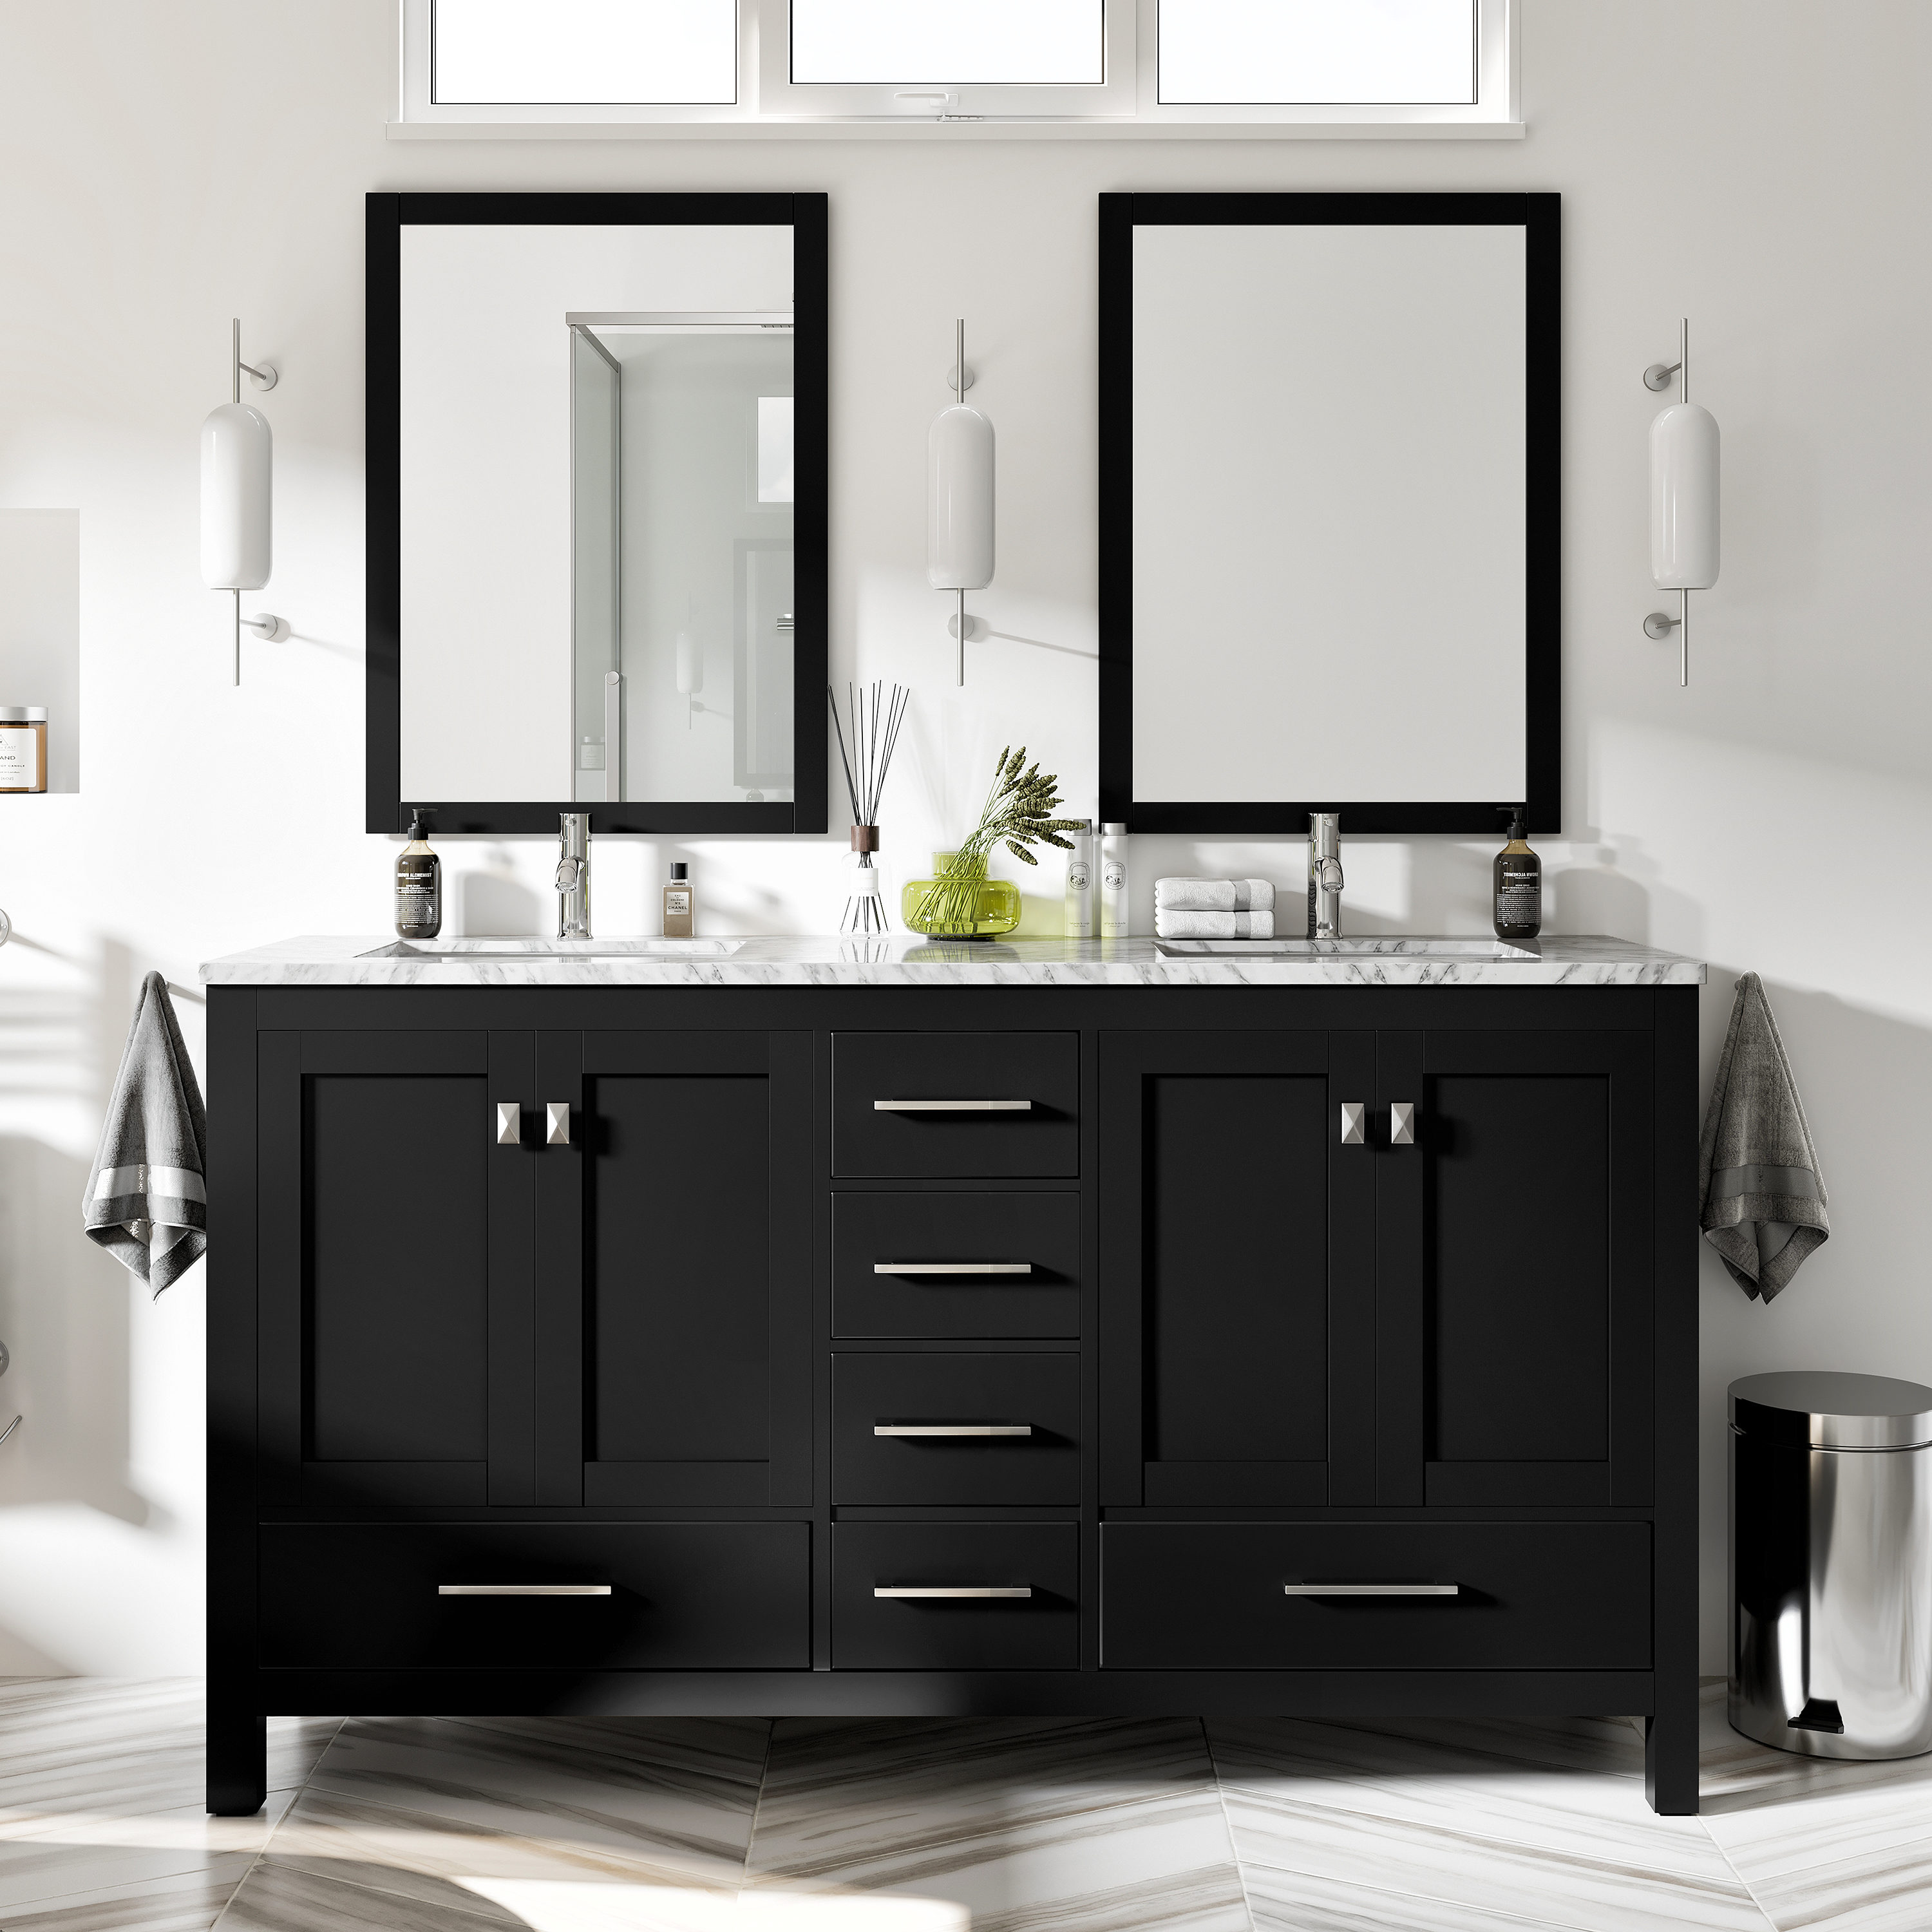 Eviva London 60-in Black Undermount Double Sink Bathroom Vanity with ...